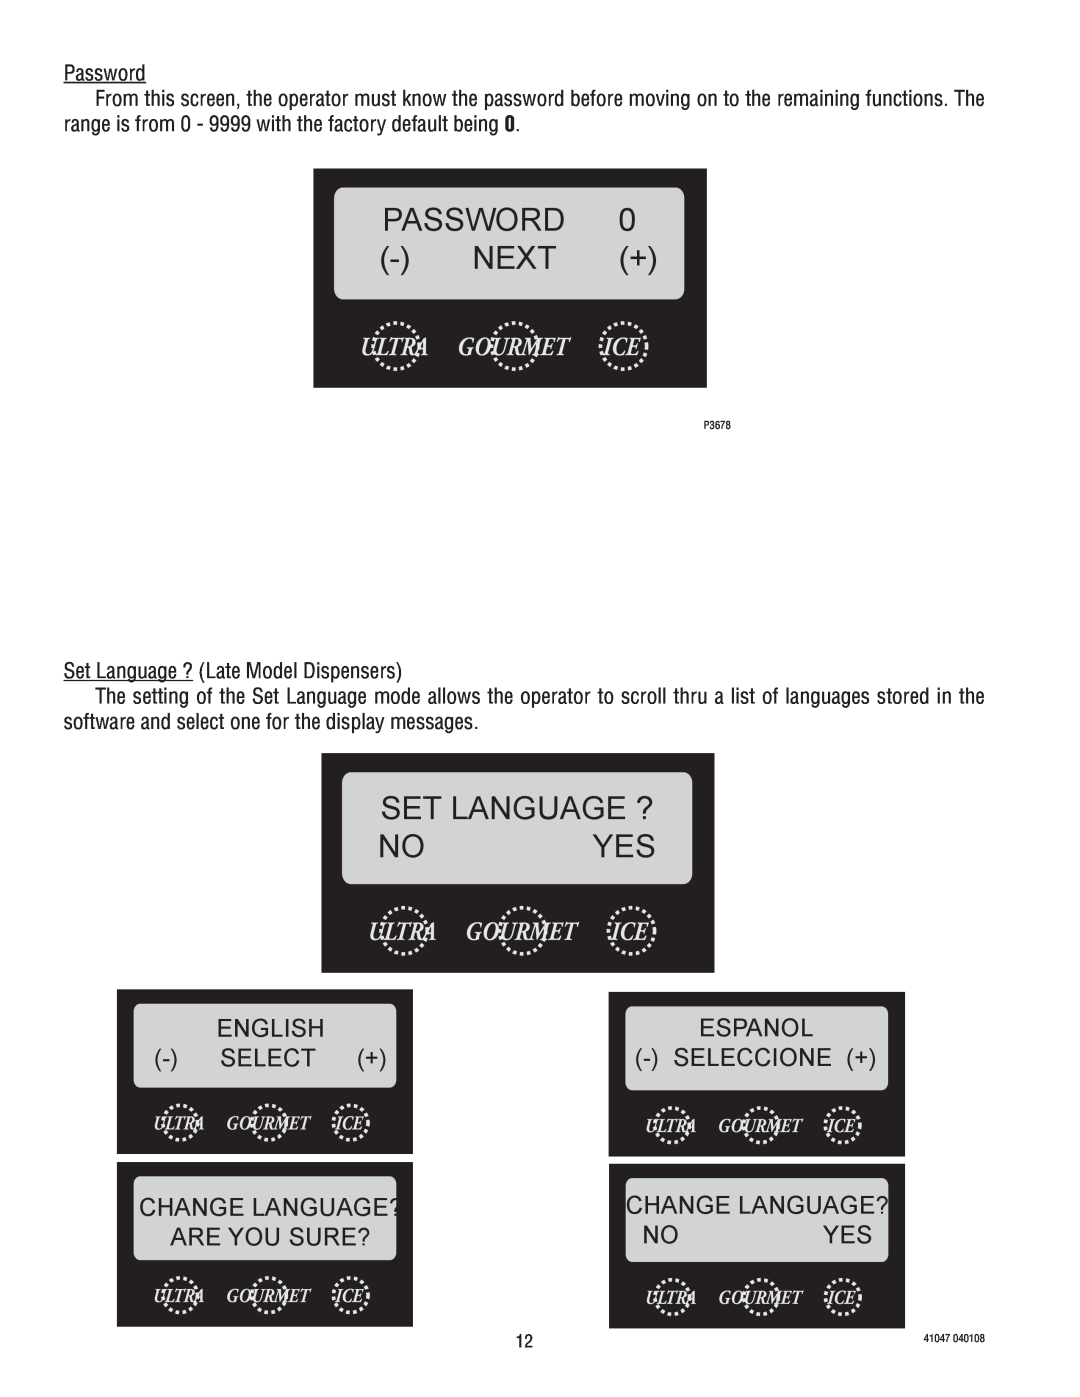 Bunn ULTRA-1 manual PASSWORD 0 - NEXT +, Set Language ? No Yes, Are You Sure? 